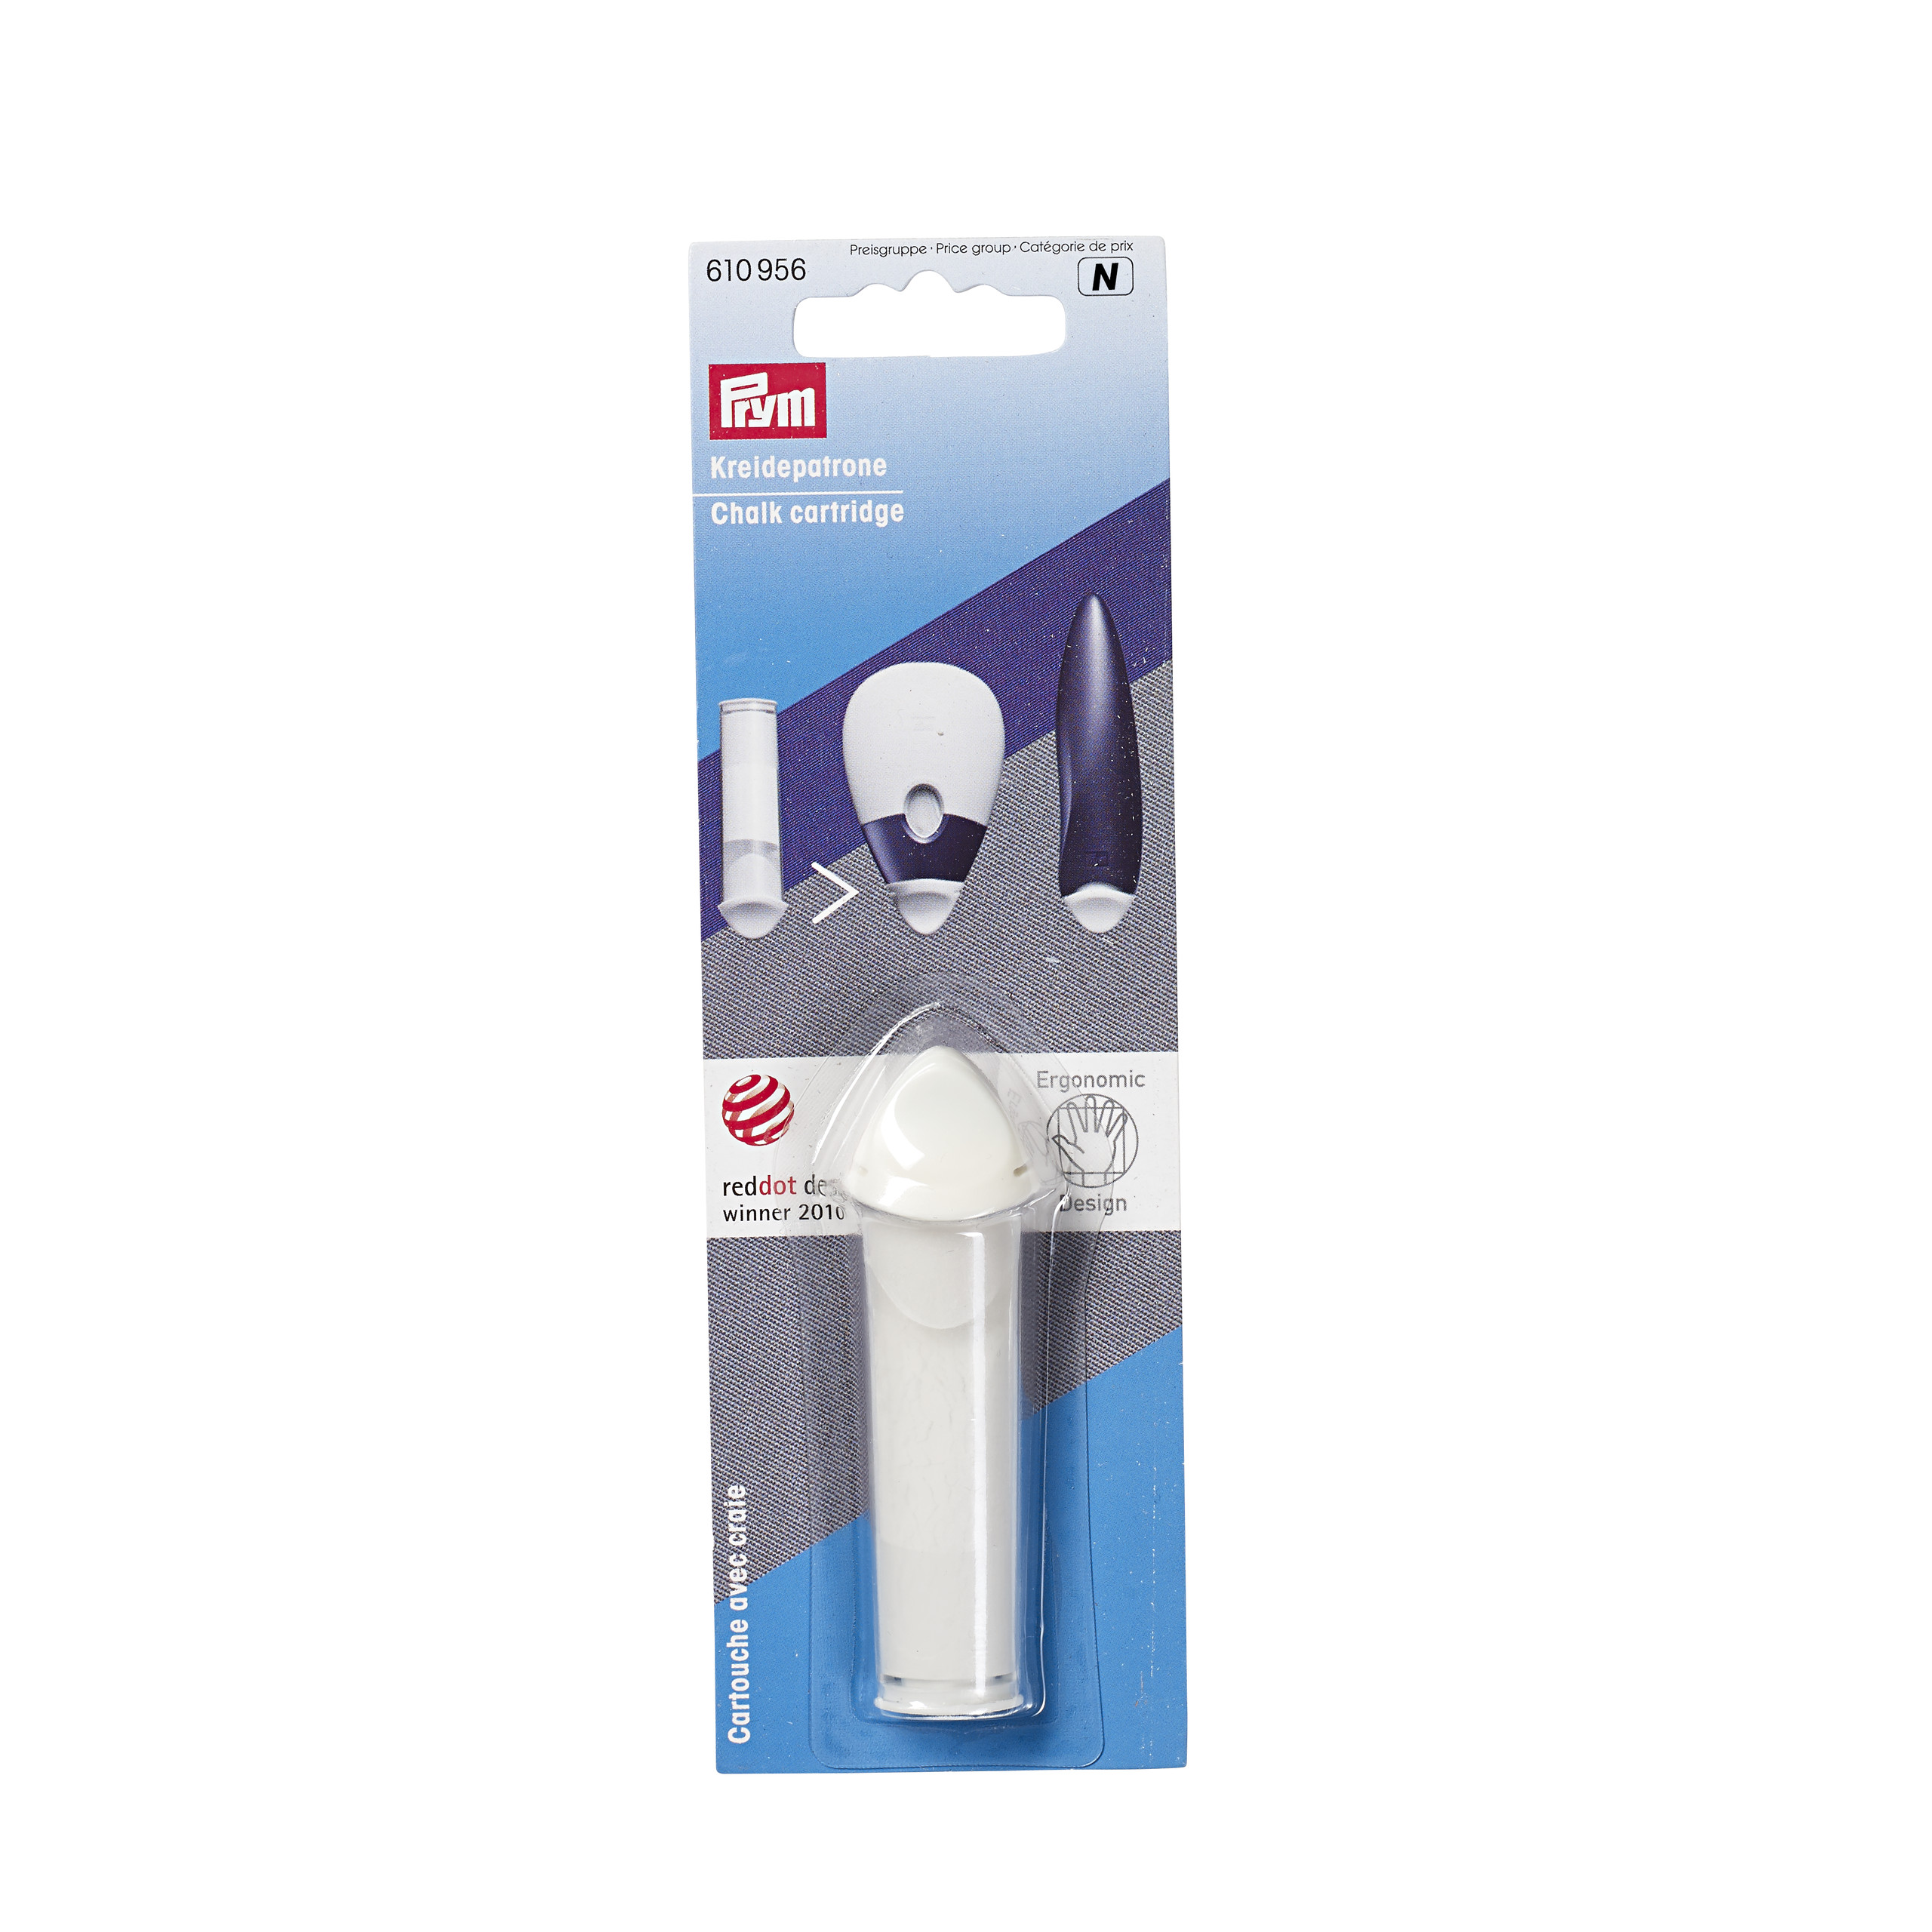 Chalk cartridge white ergonomic, 1 St